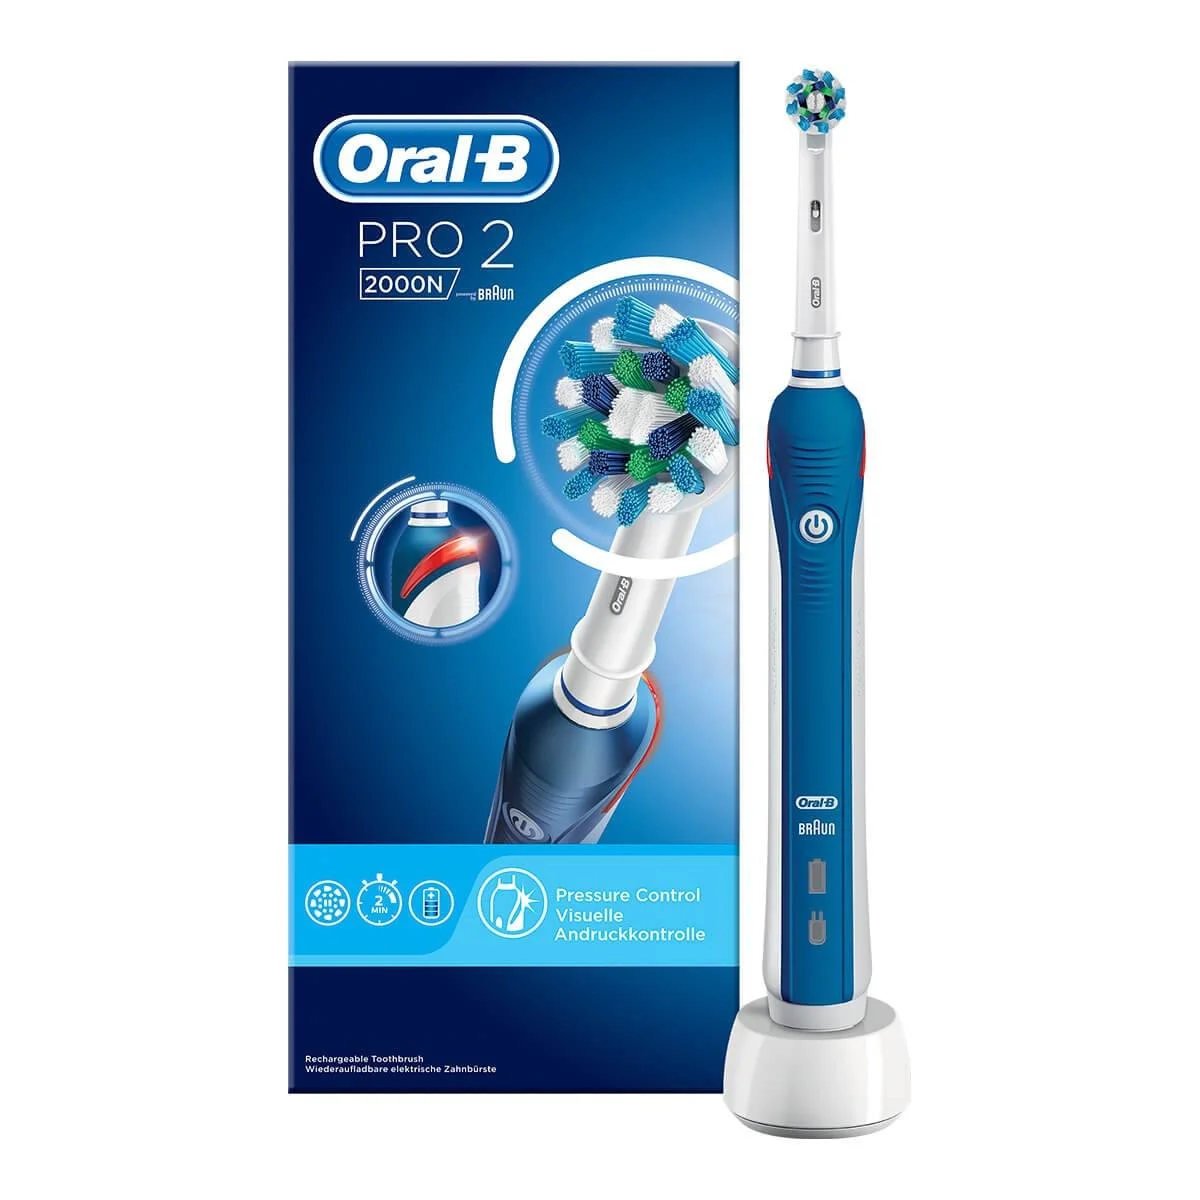 Oral-B Pro 2 2000N electric toothbrush 